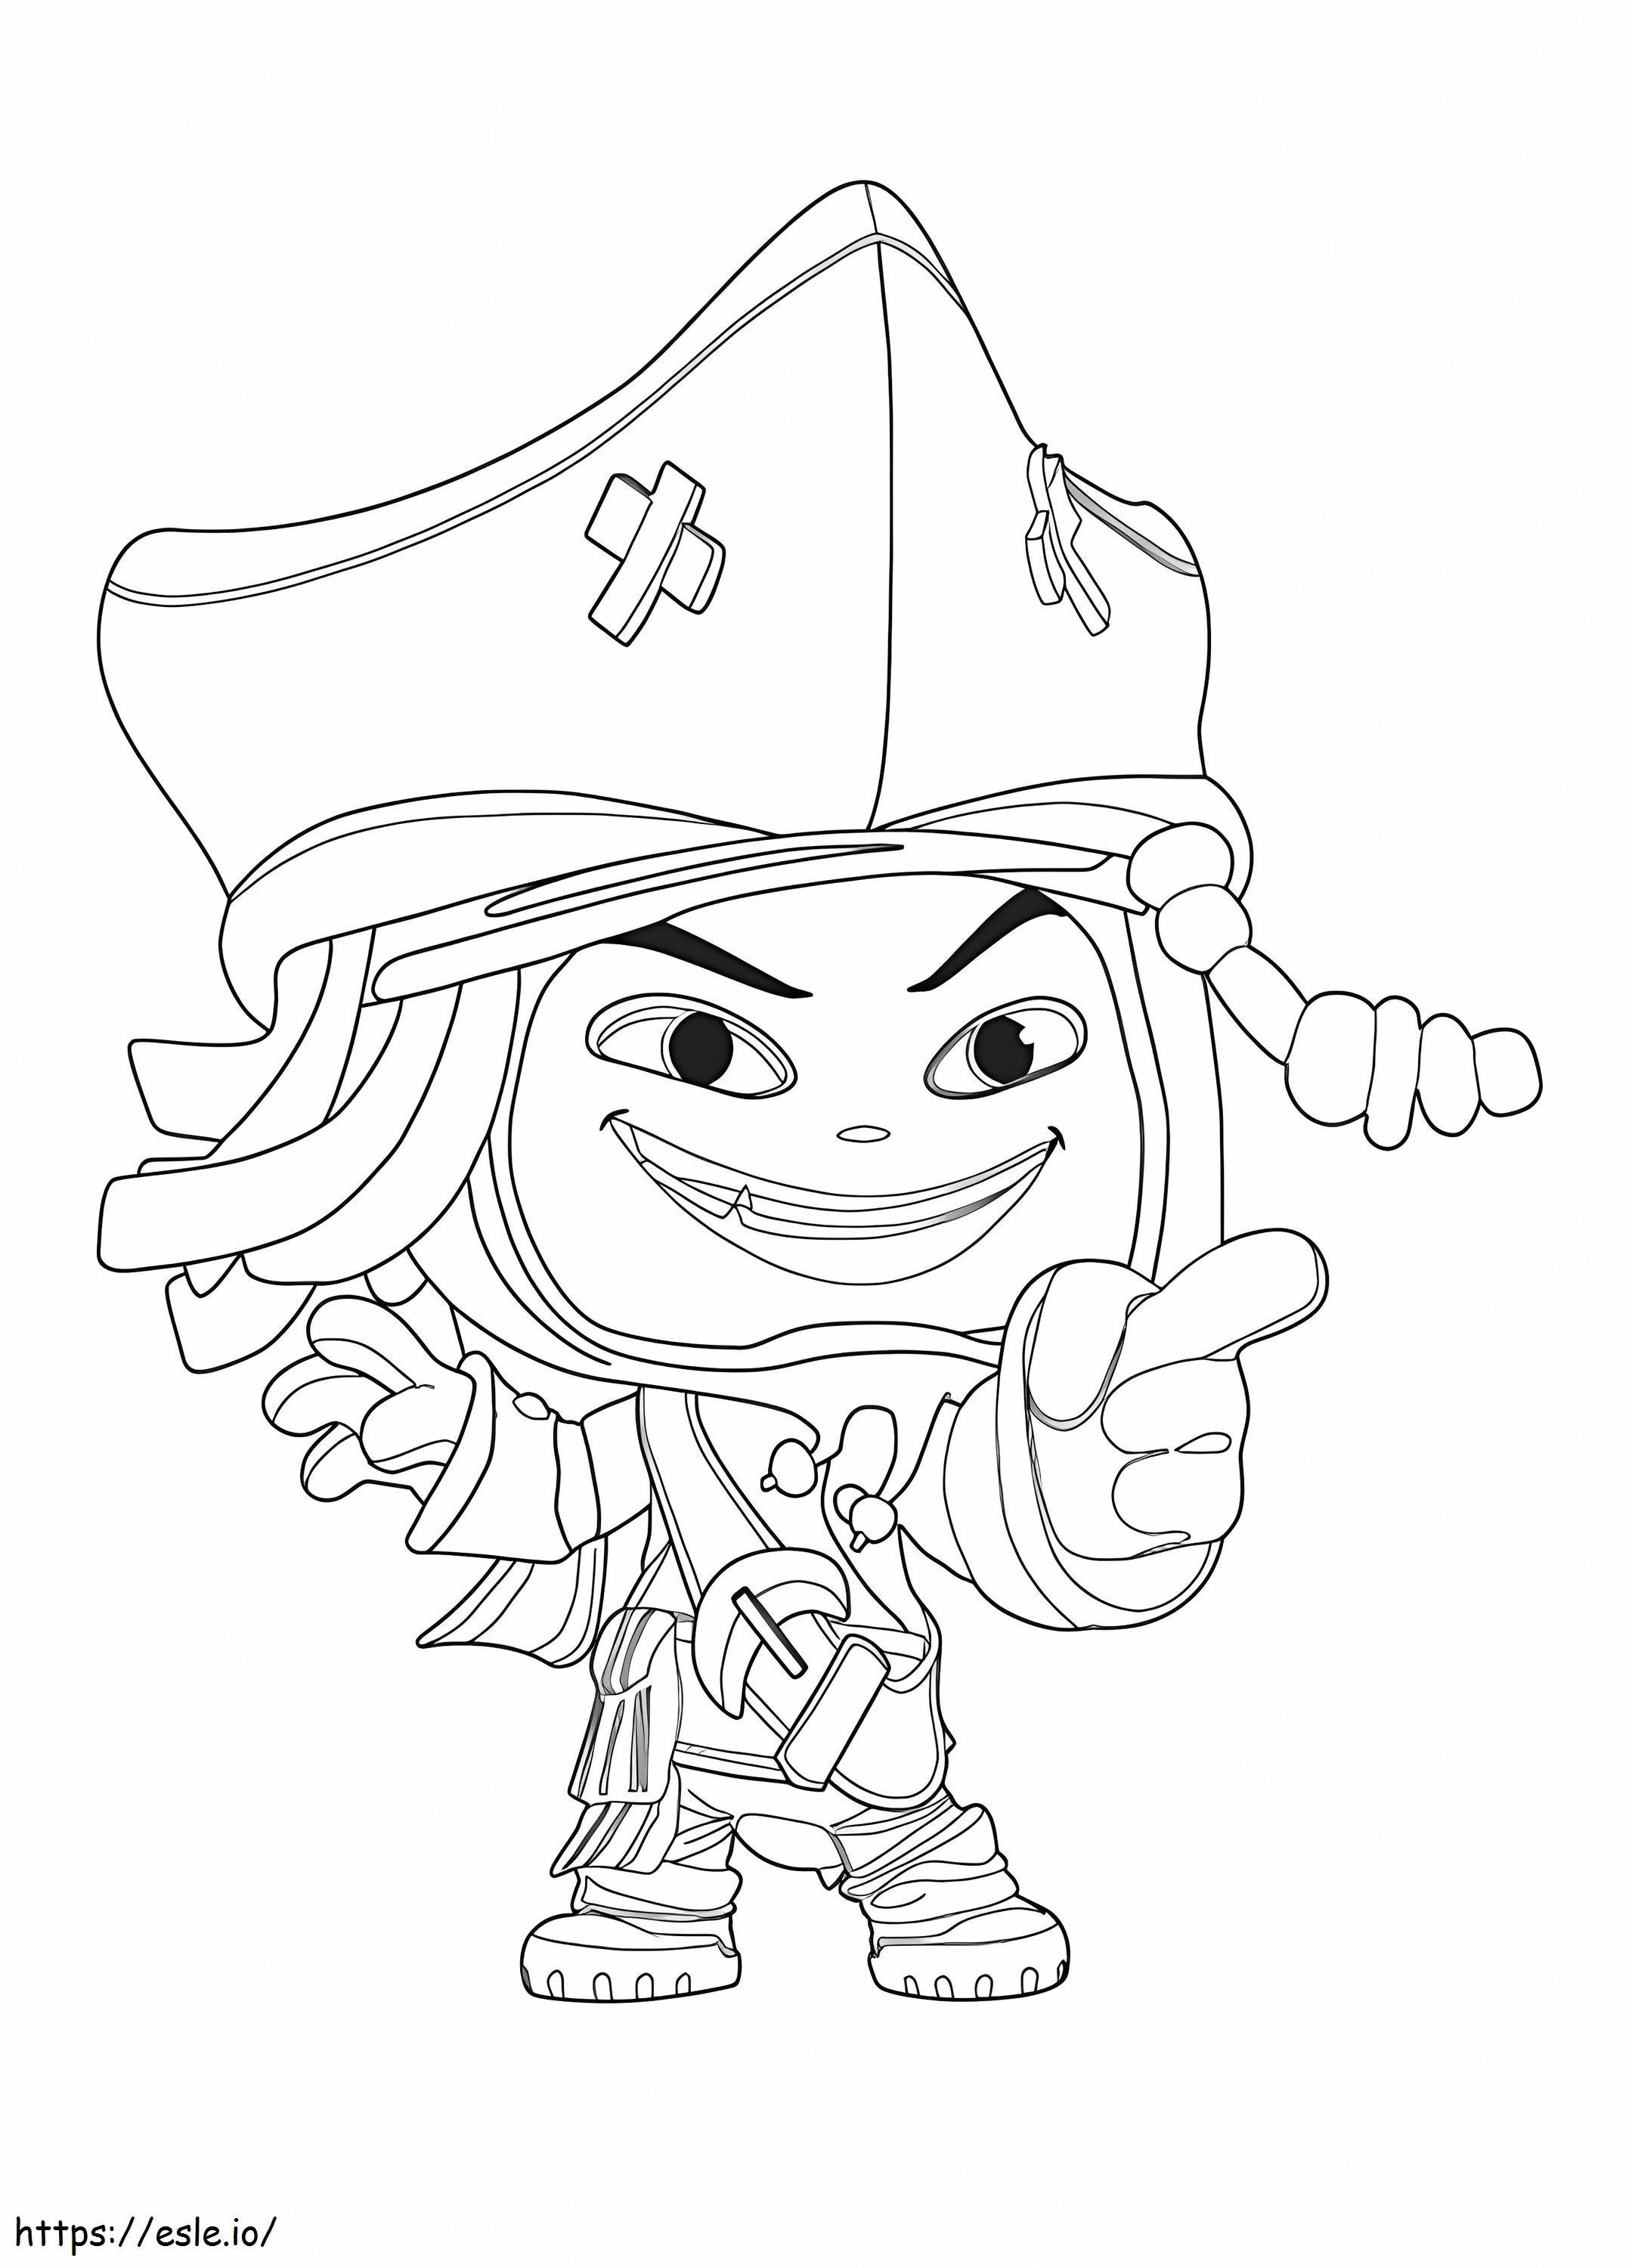 Jack Sparrow do Universo Disney para colorir